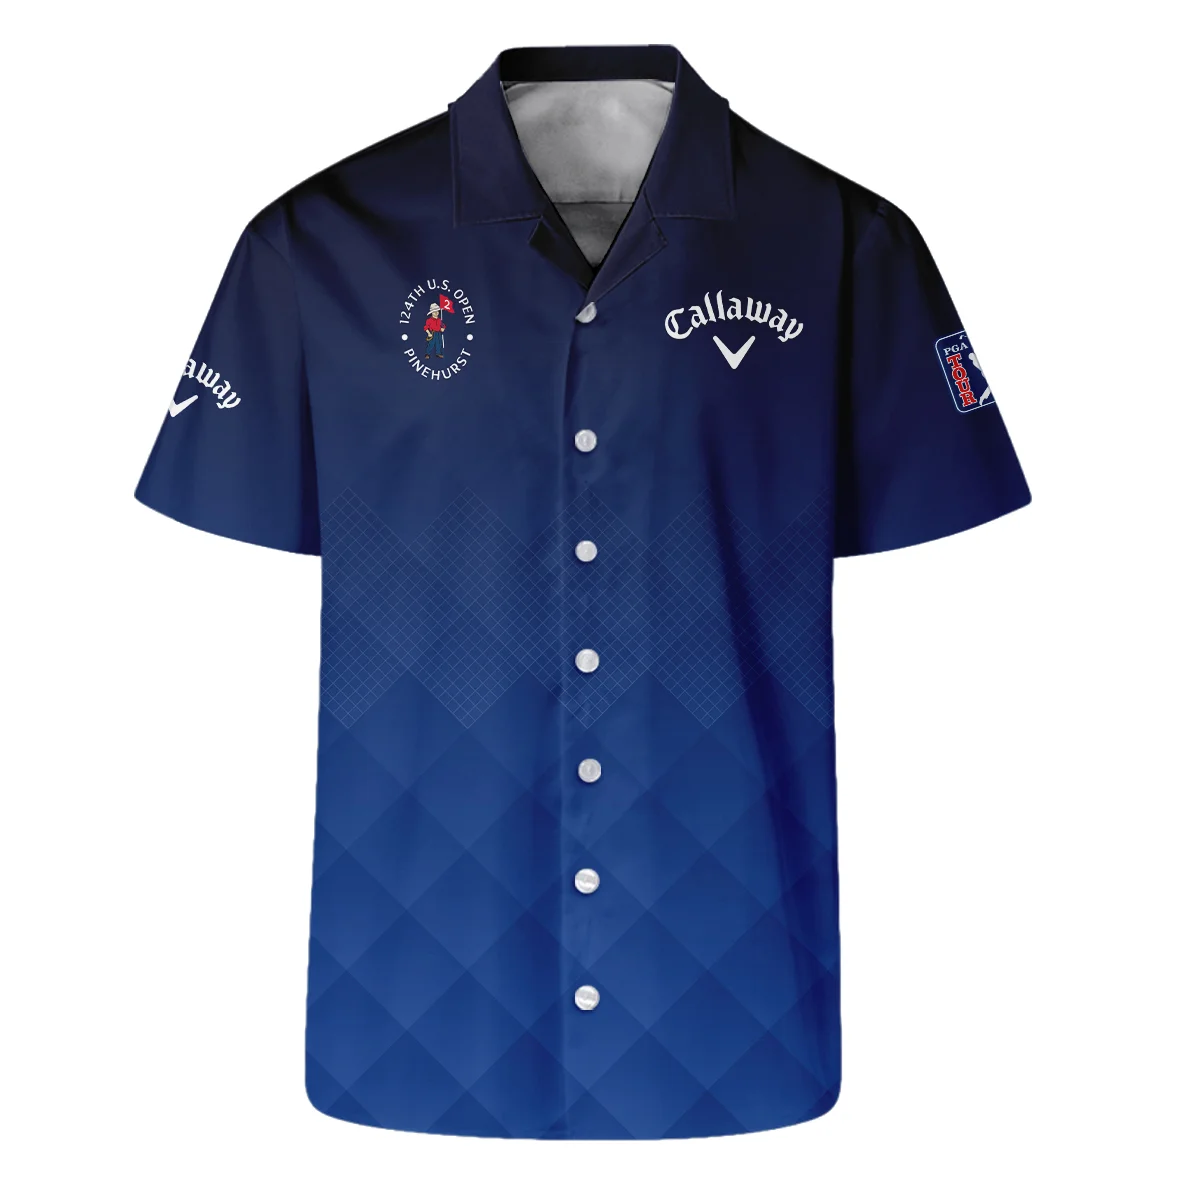 124th U.S. Open Pinehurst Callaway Dark Blue Gradient Stripes Pattern Polo Shirt Style Classic Polo Shirt For Men